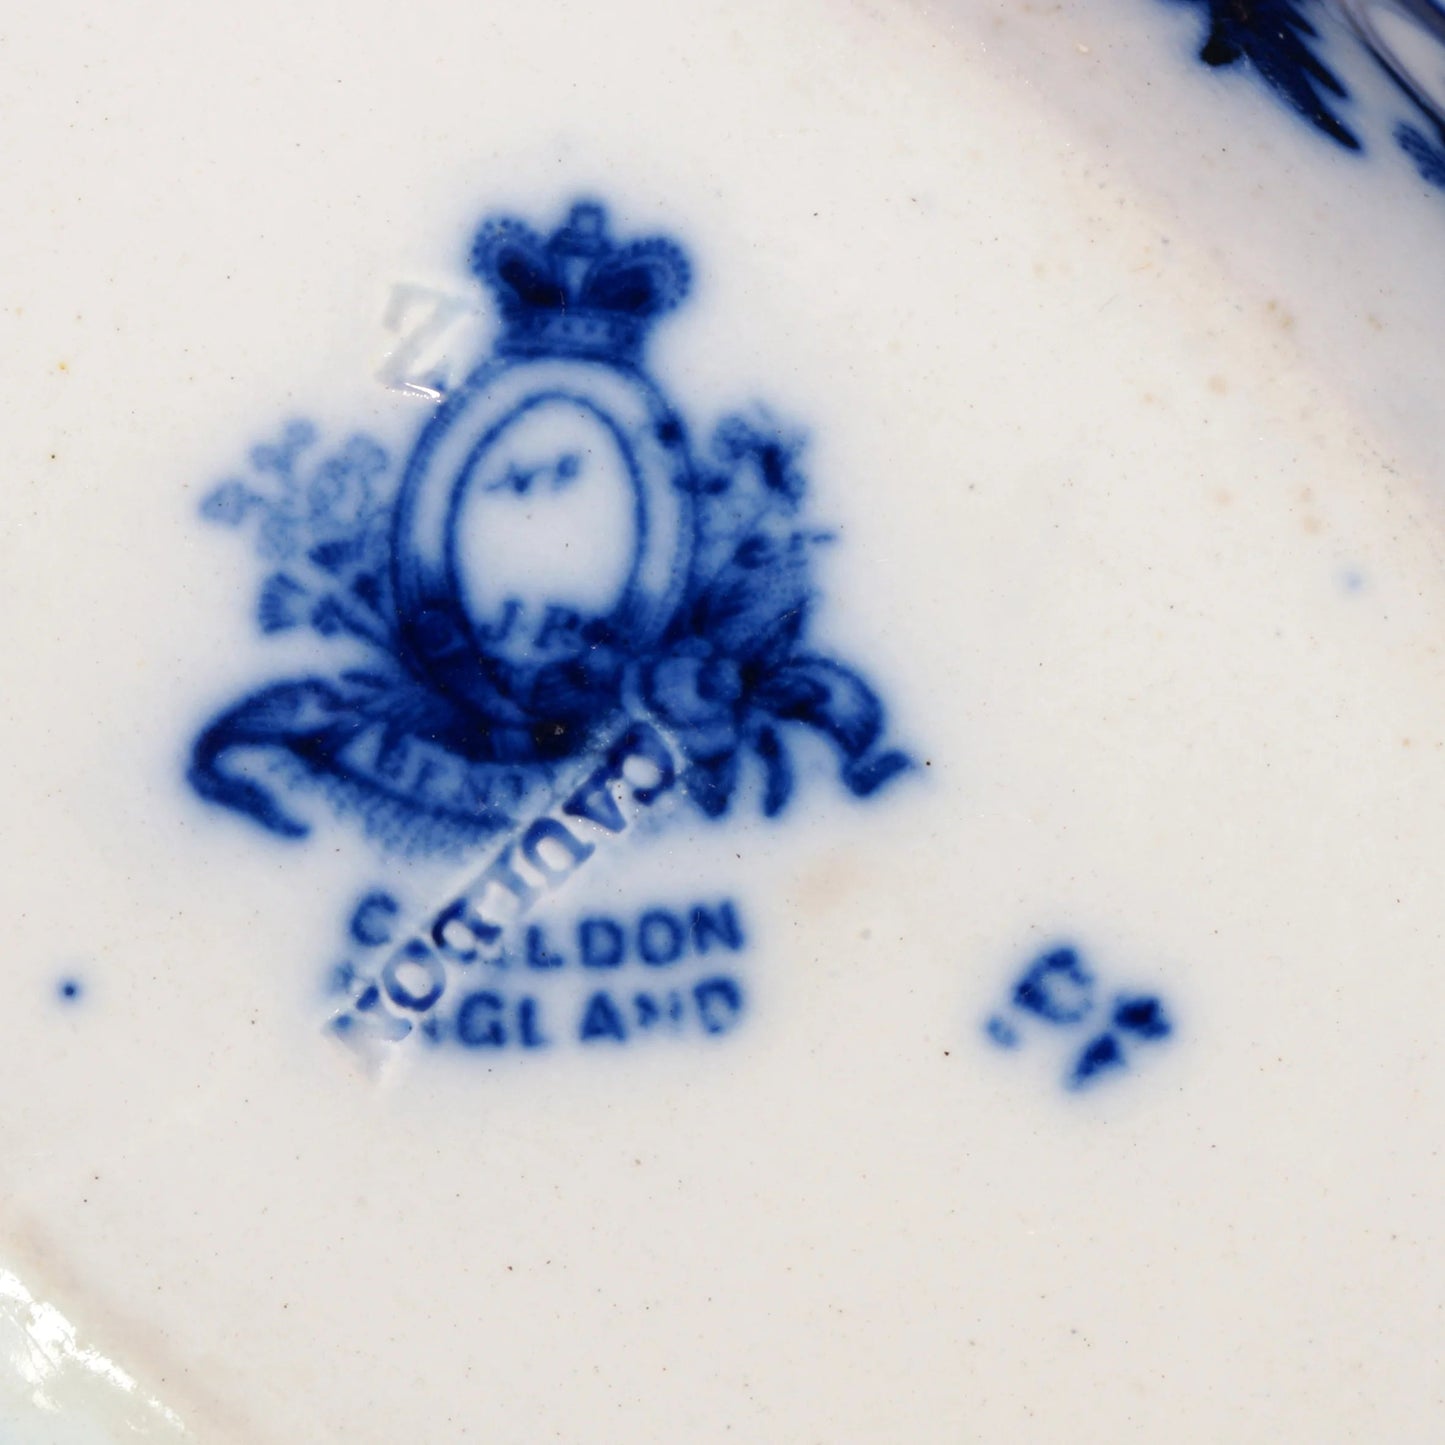 Cauldon England Flow Blue Soap or Relish Dish Bentick Pattern c 1890 - Bear and Raven Antiques